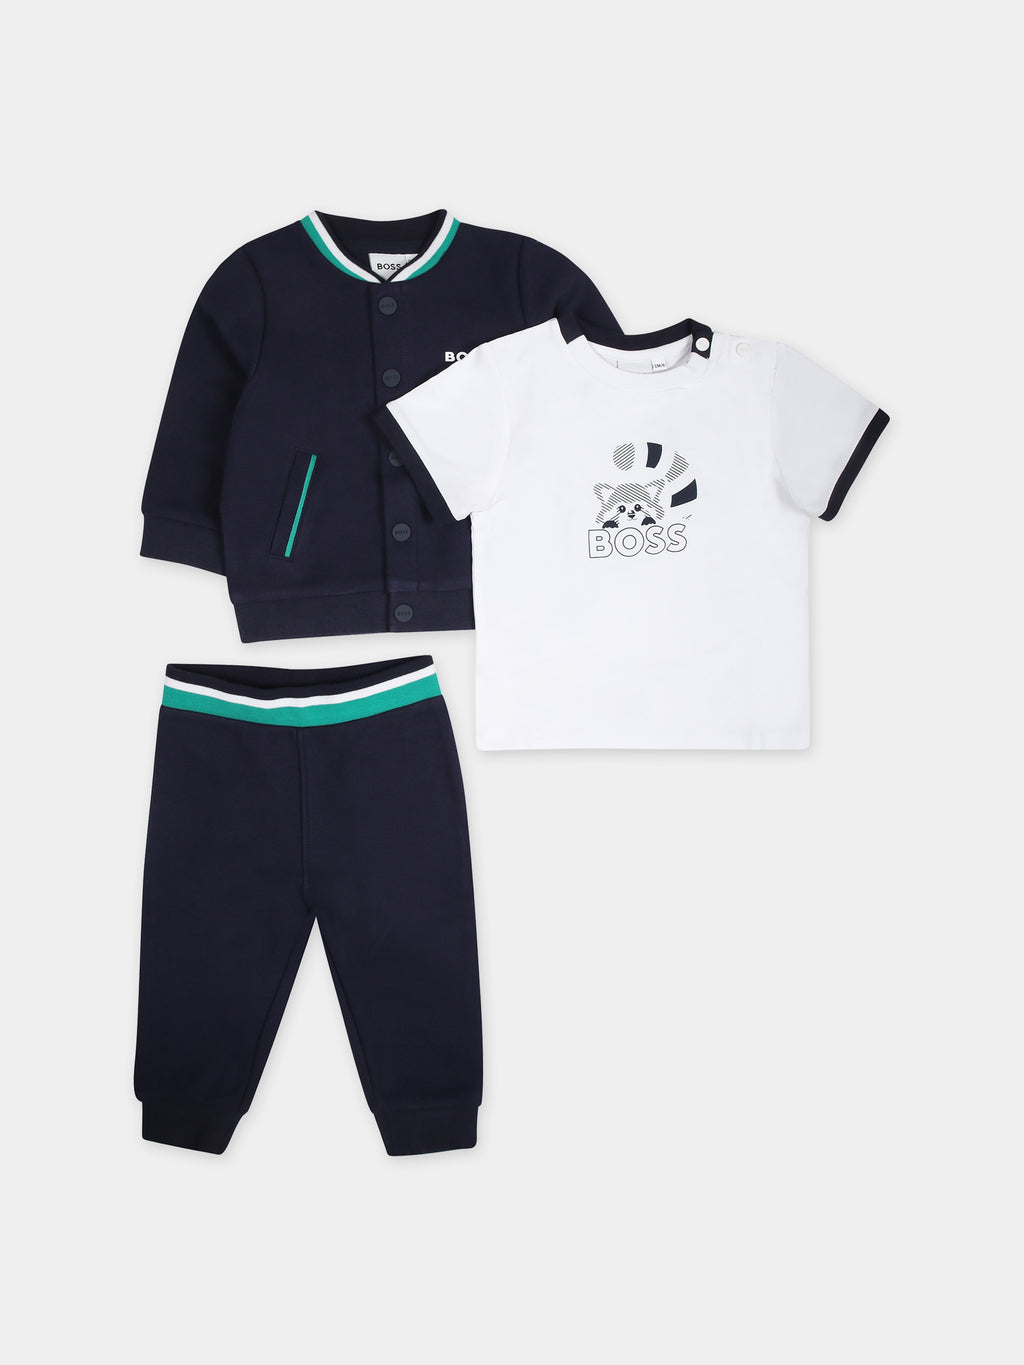 Blue sport suit set for baby boy